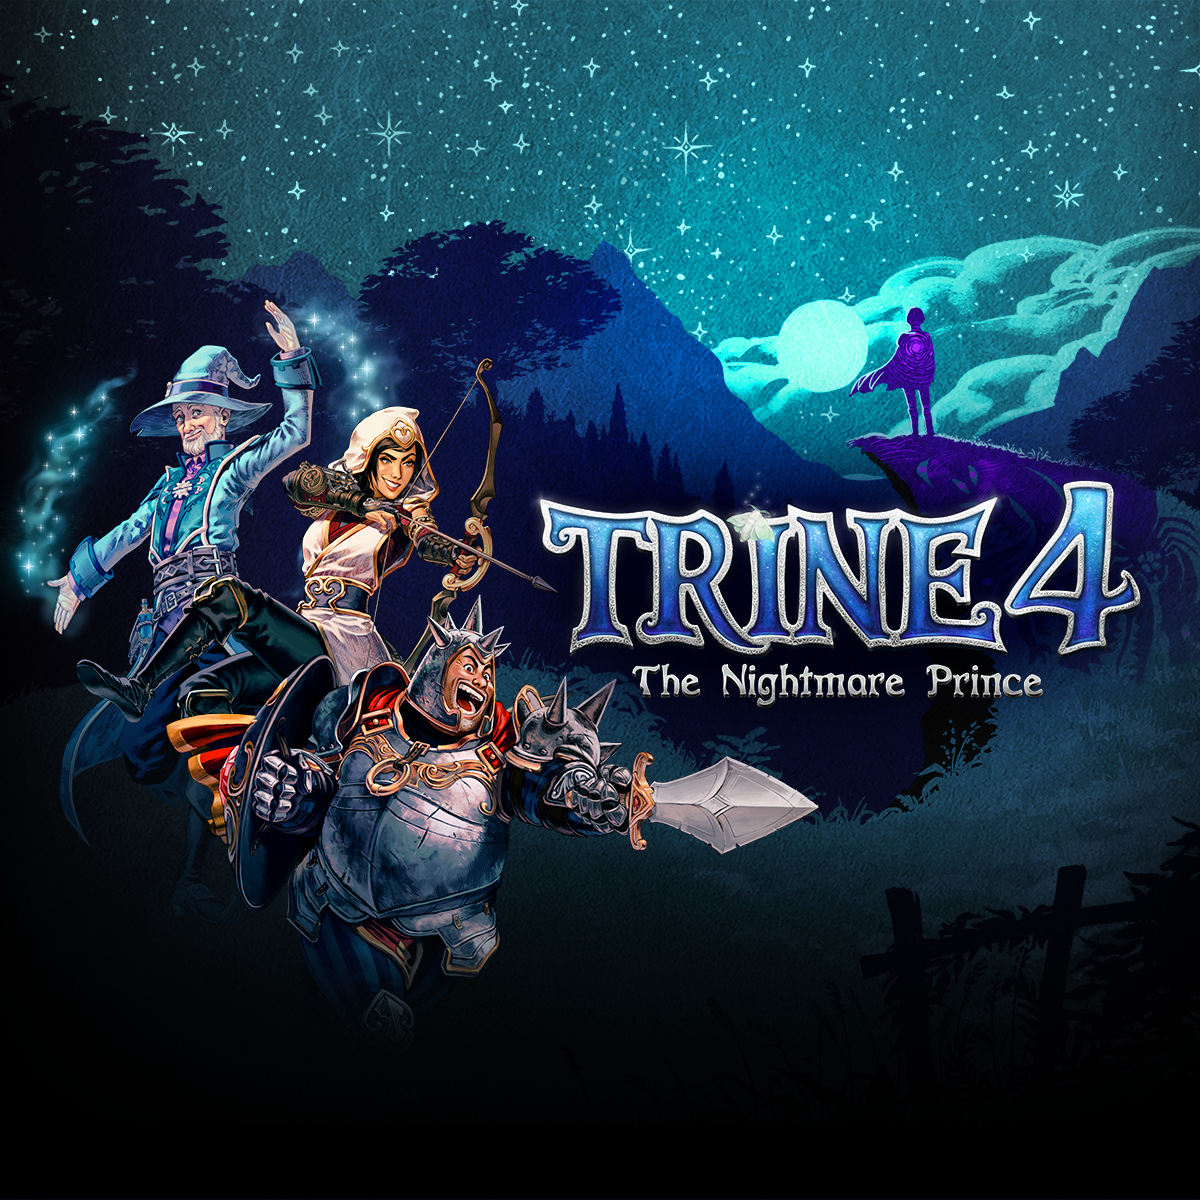 Trine 4 - The Nightmare Prince